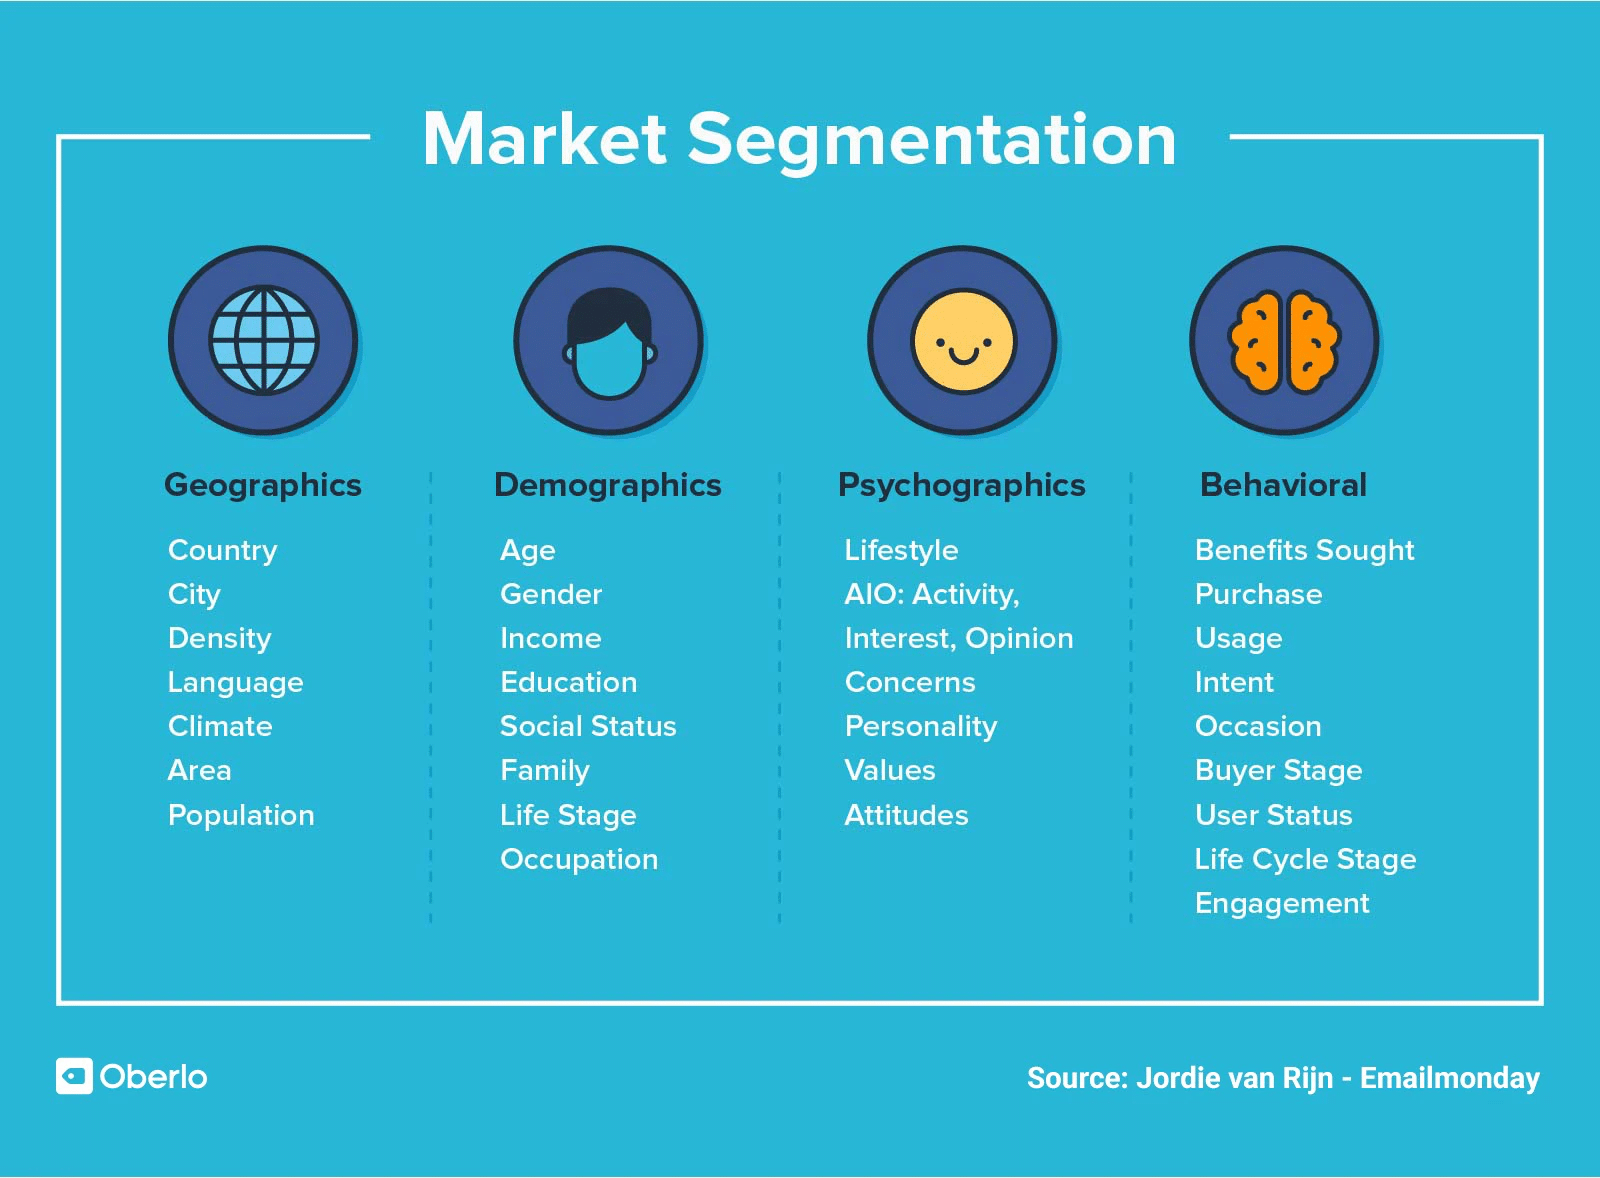 Types of market segmentation for email marketing